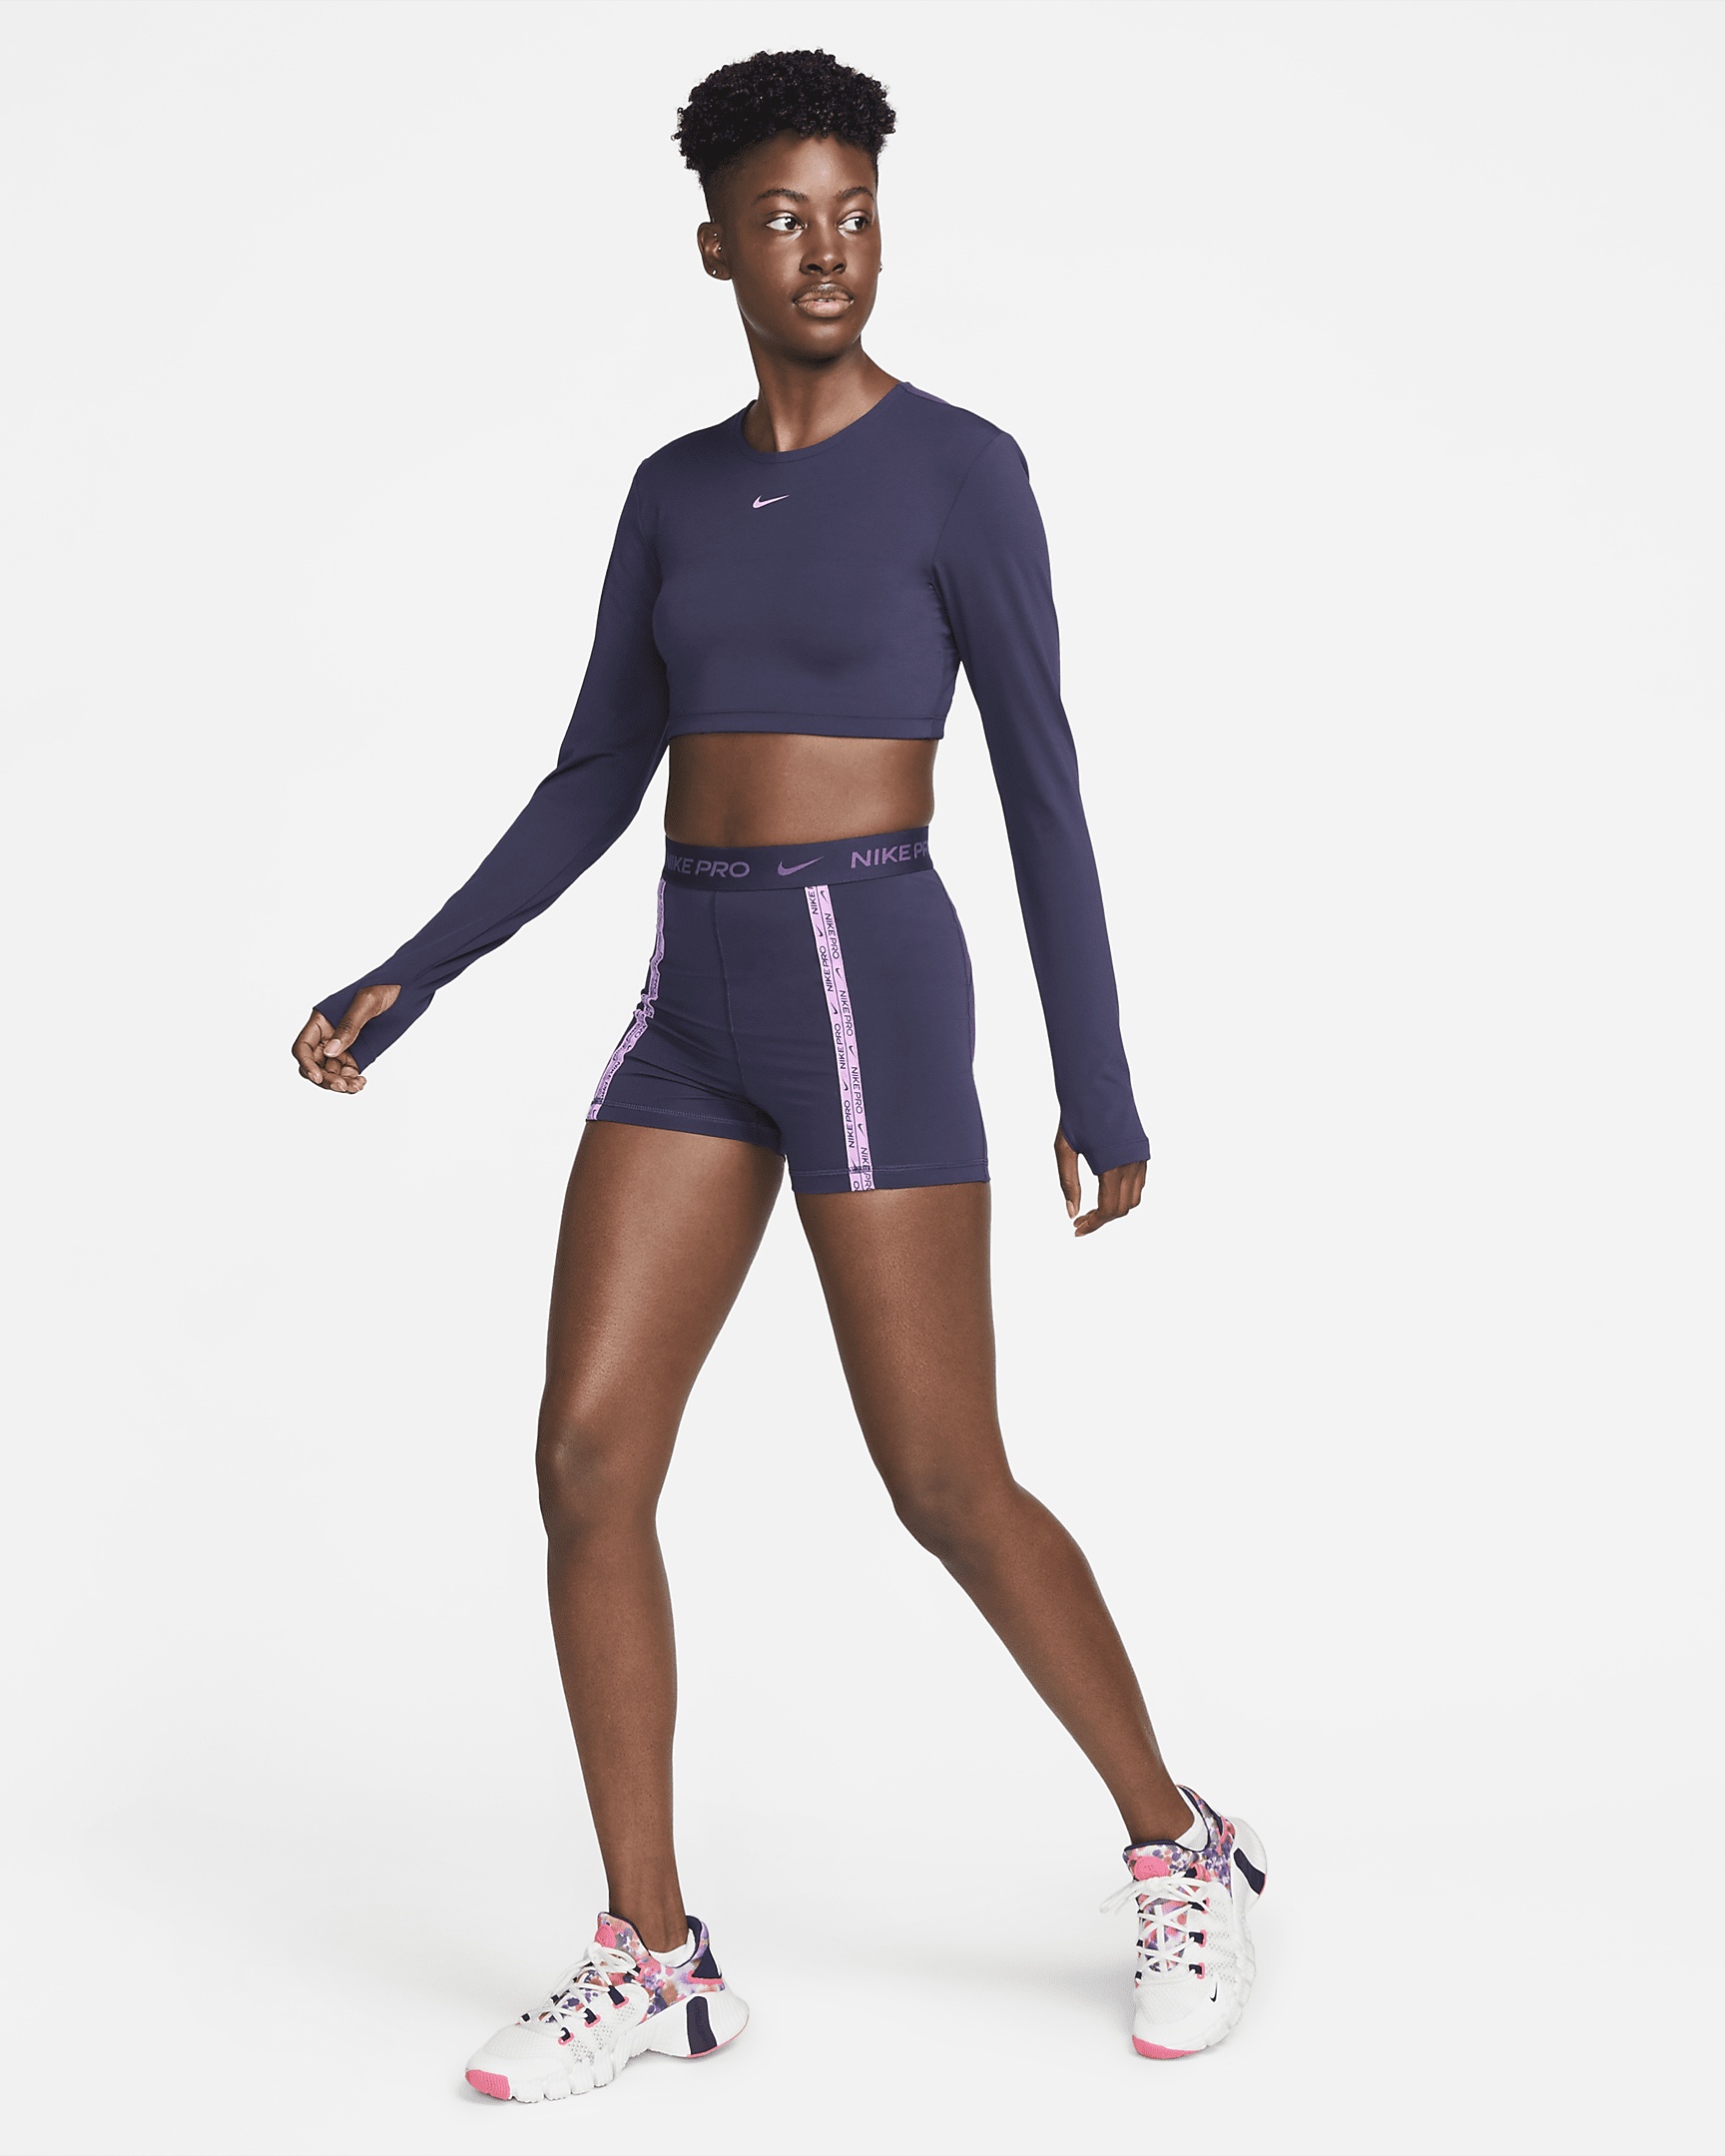 Women's Nike Pro Dri-FIT Cropped Long-Sleeve Top - 6